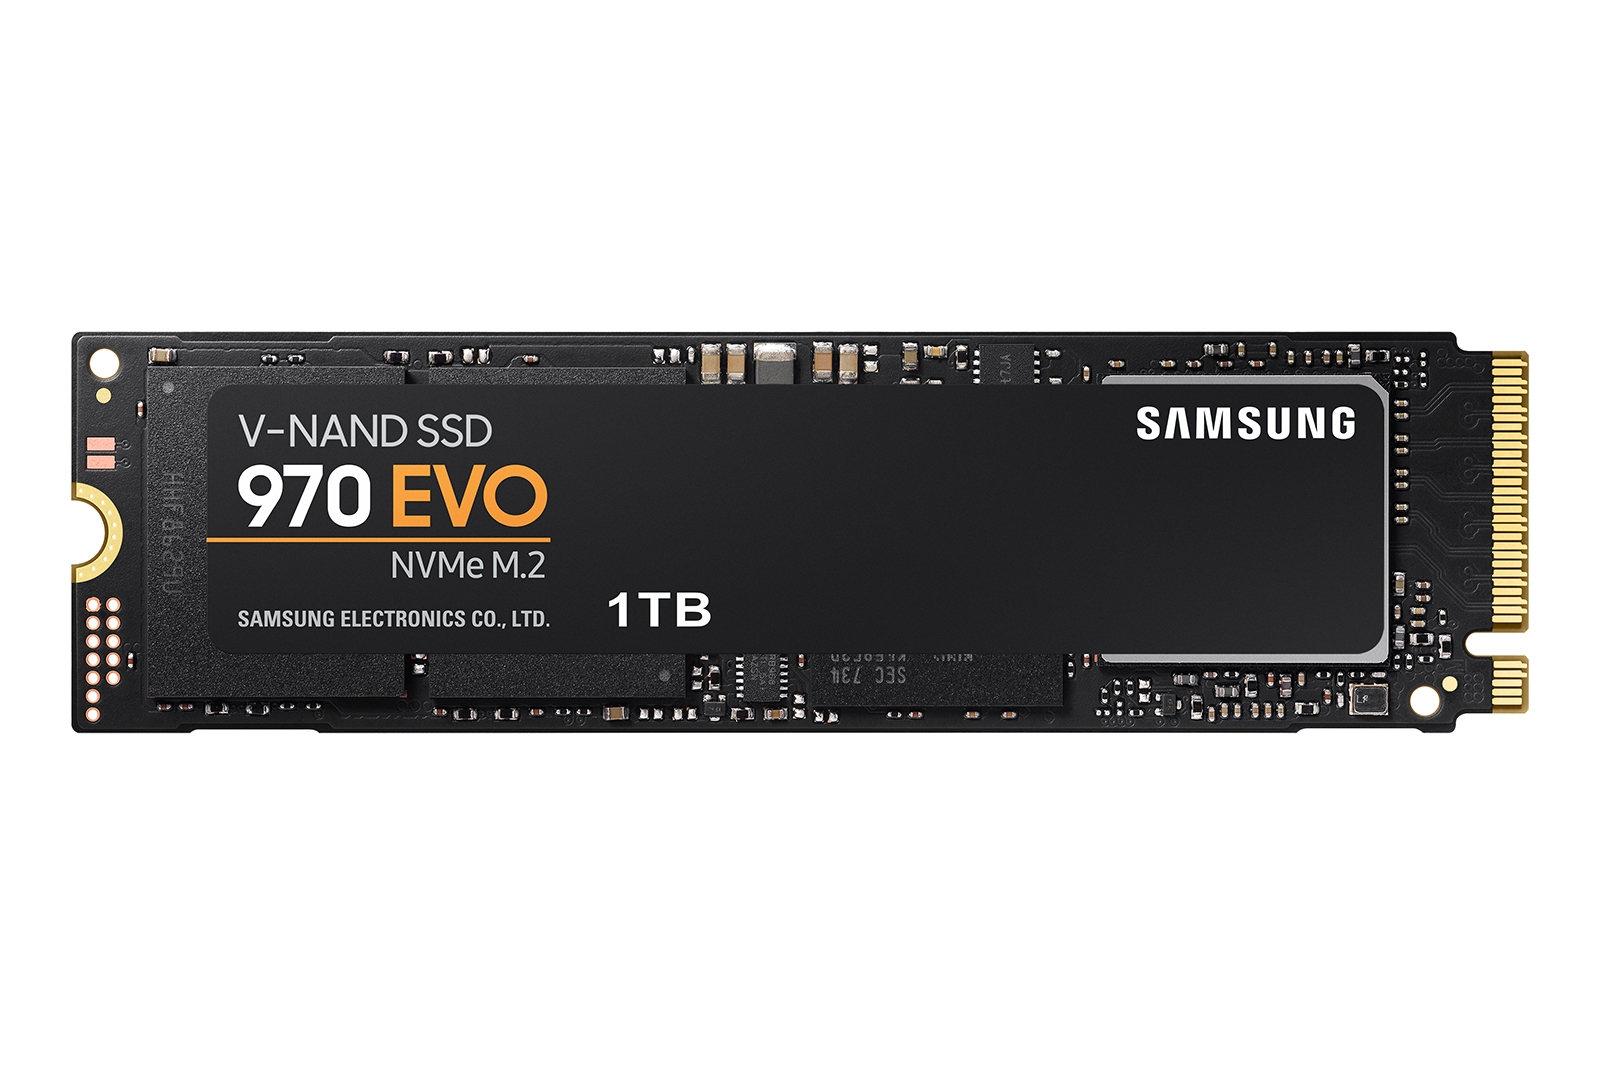 Samsung 970 EVO Plus SSD 2TB - M.2 NVMe Interface Internal Solid